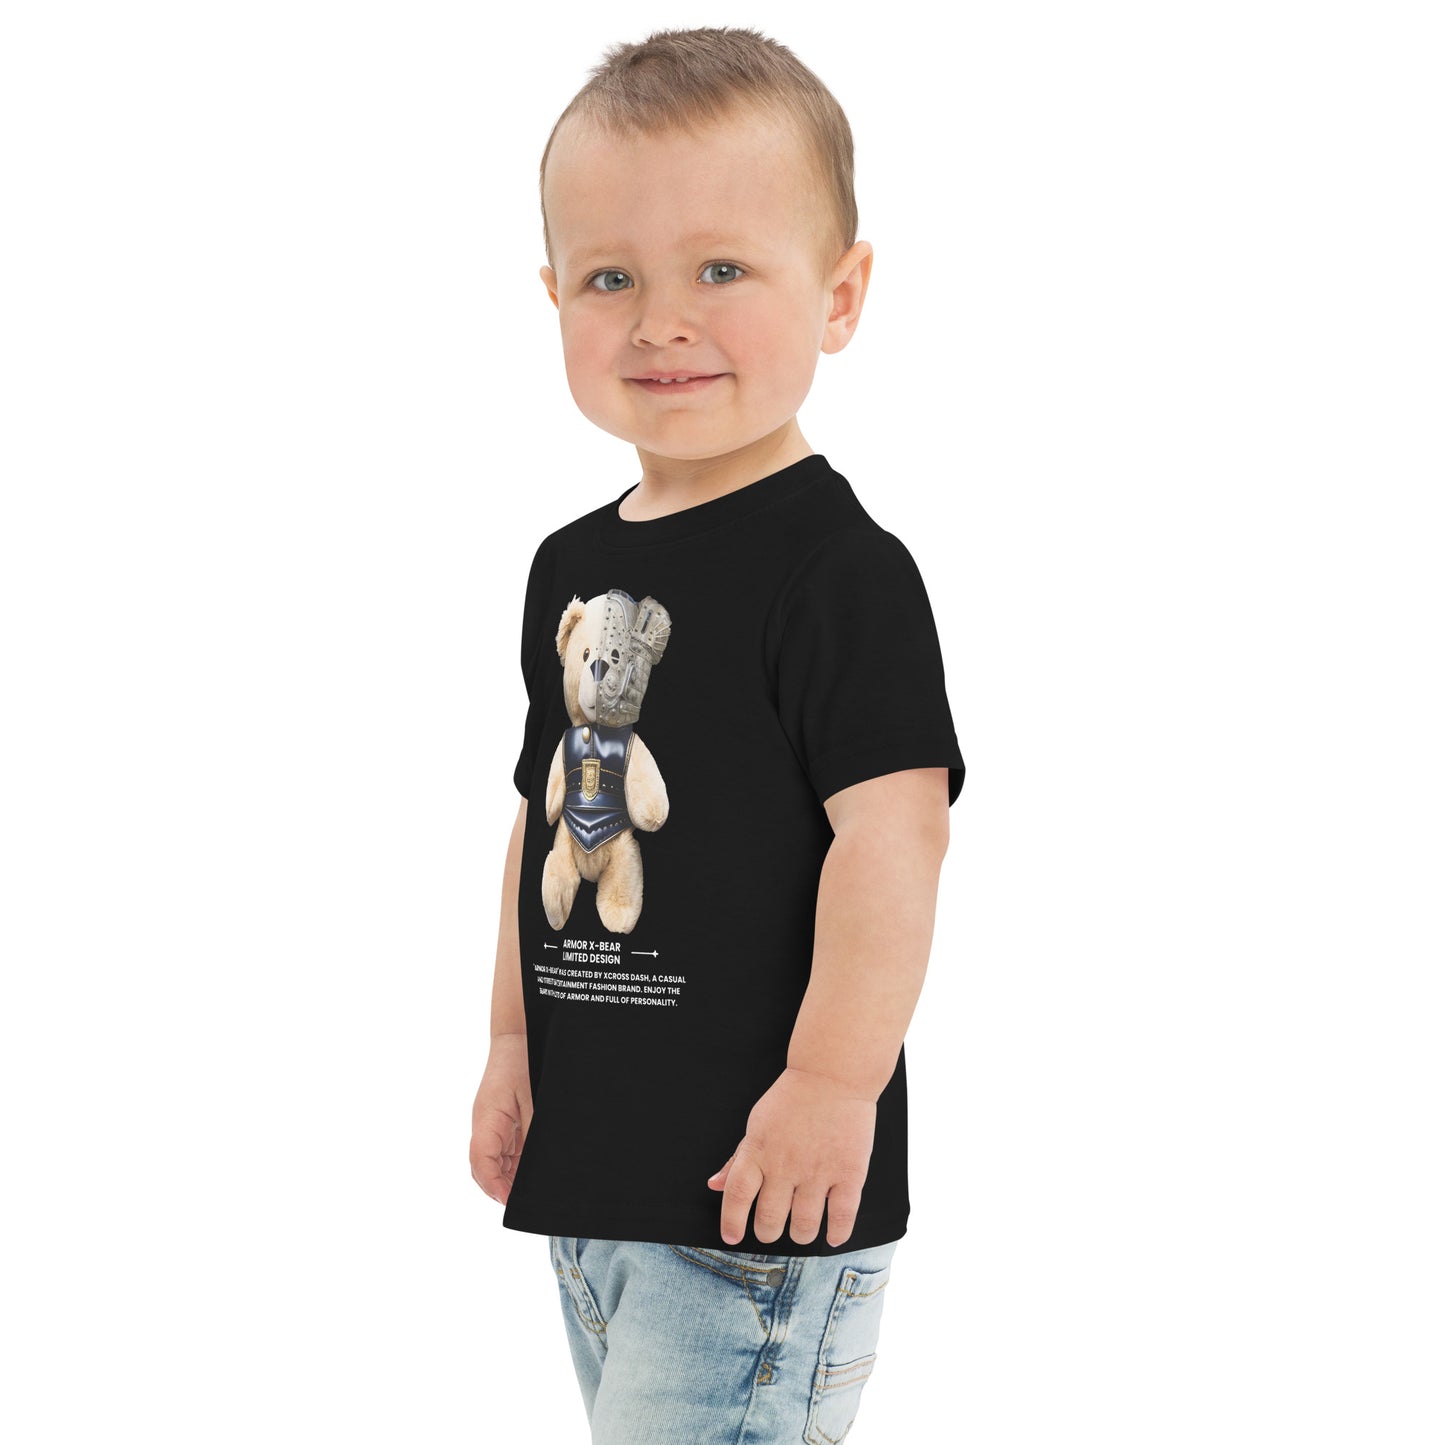 ARMOR X-BEAR LIMITED DESIGN MACHIN NO.9 TYPE-B | Kids Toddler jersey t-shirt | 5colors